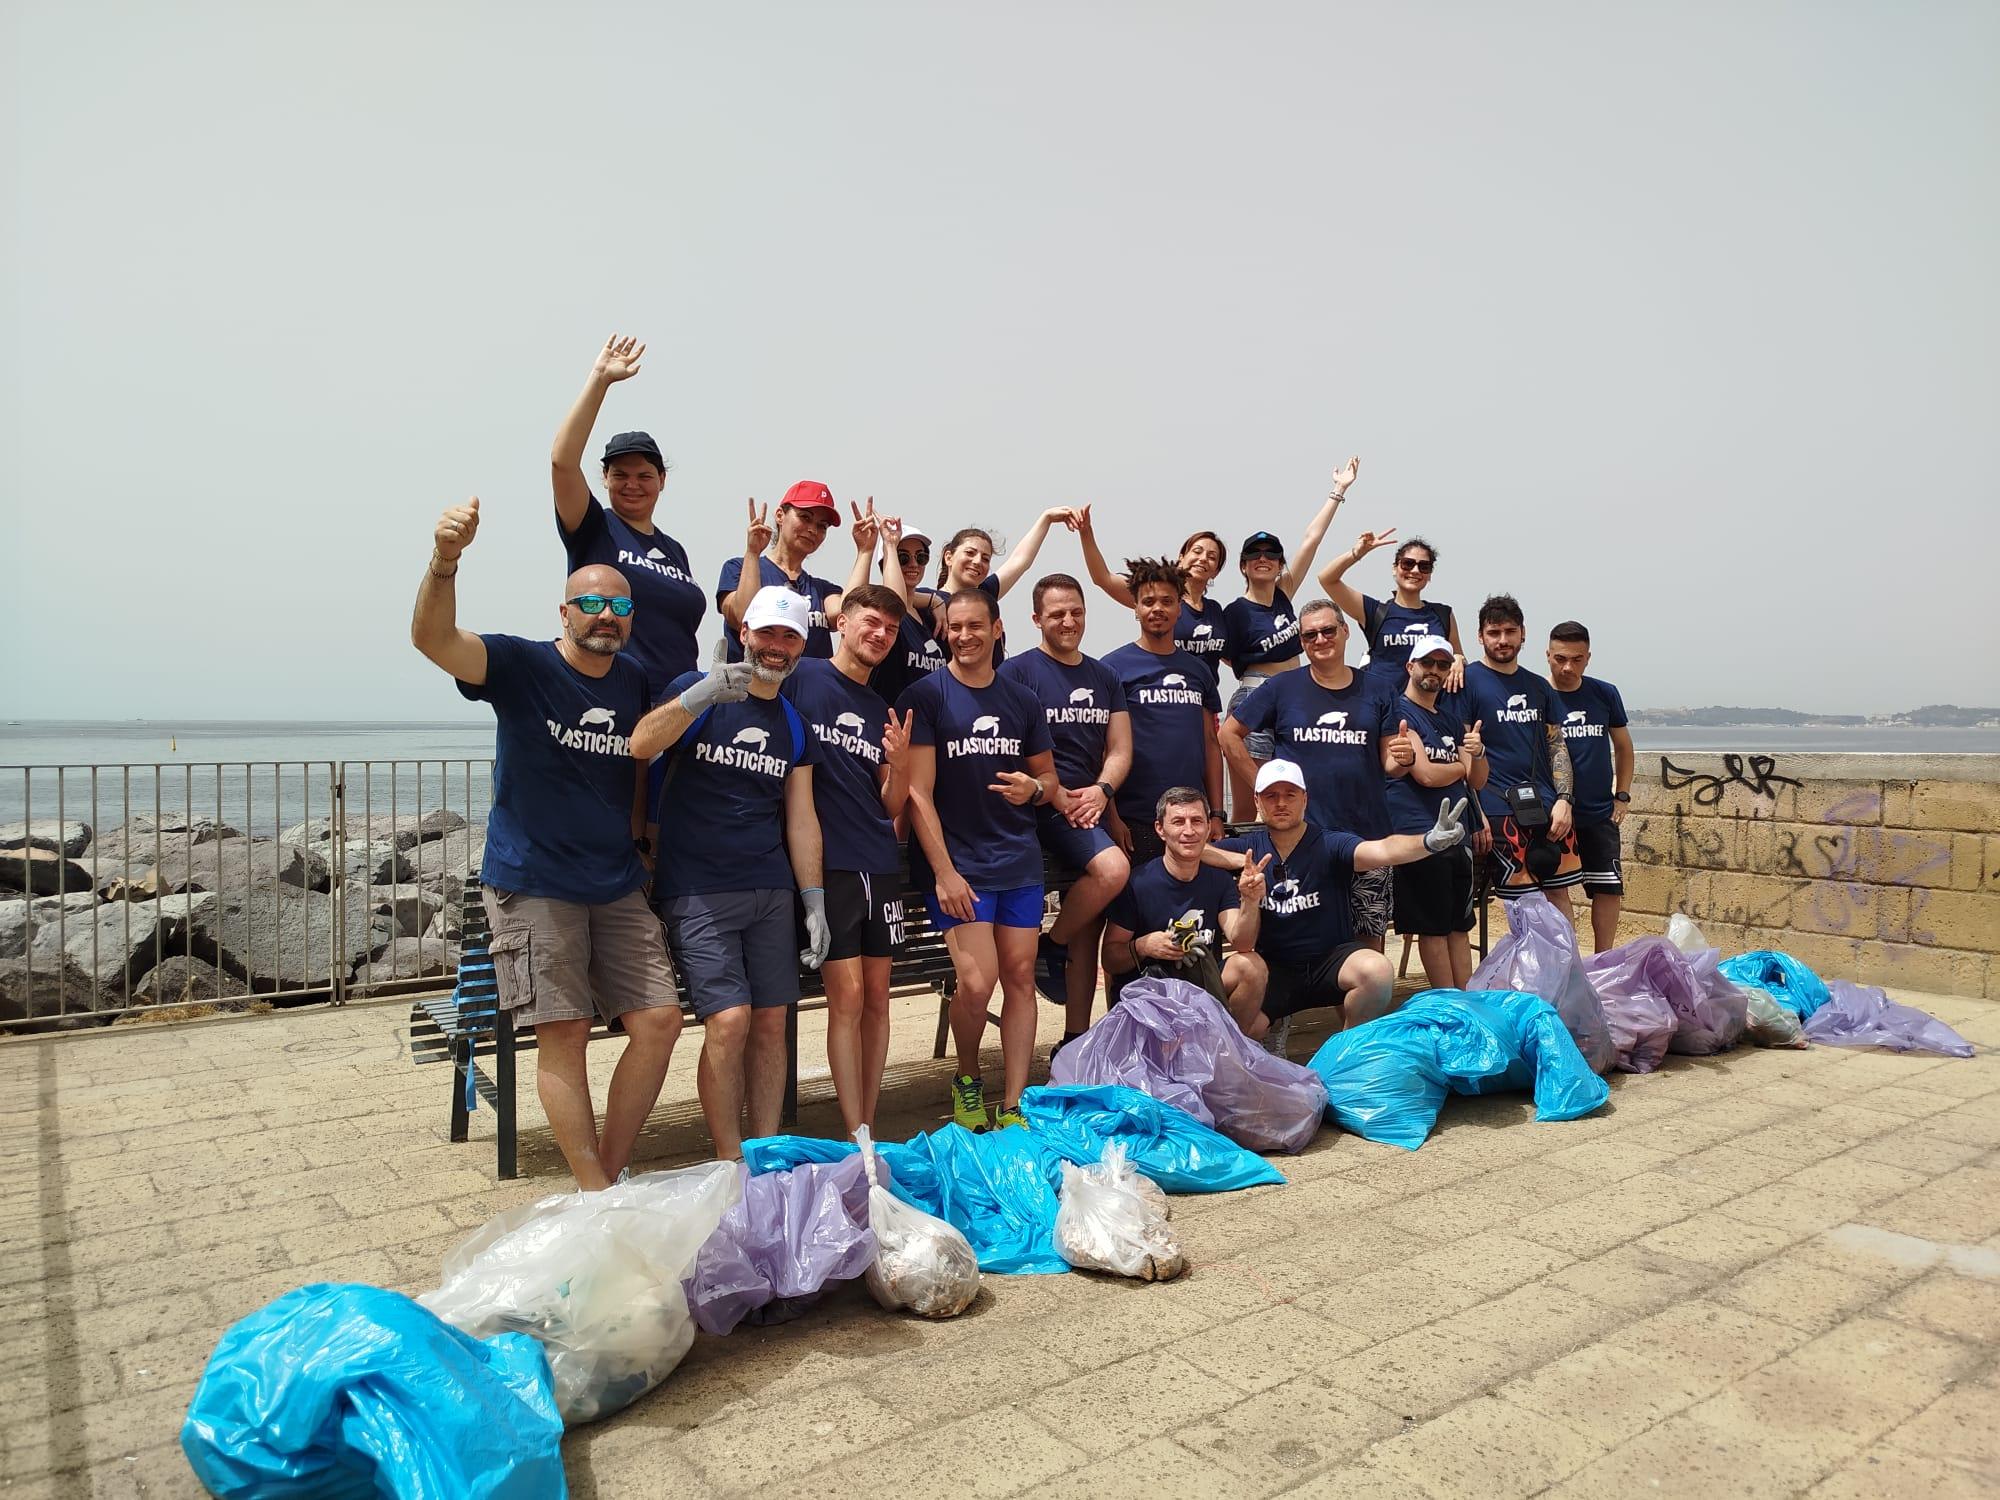 Team Building e pulizia ambientale: Dilc si unisce a Plastic Free a Bagnoli (NA)